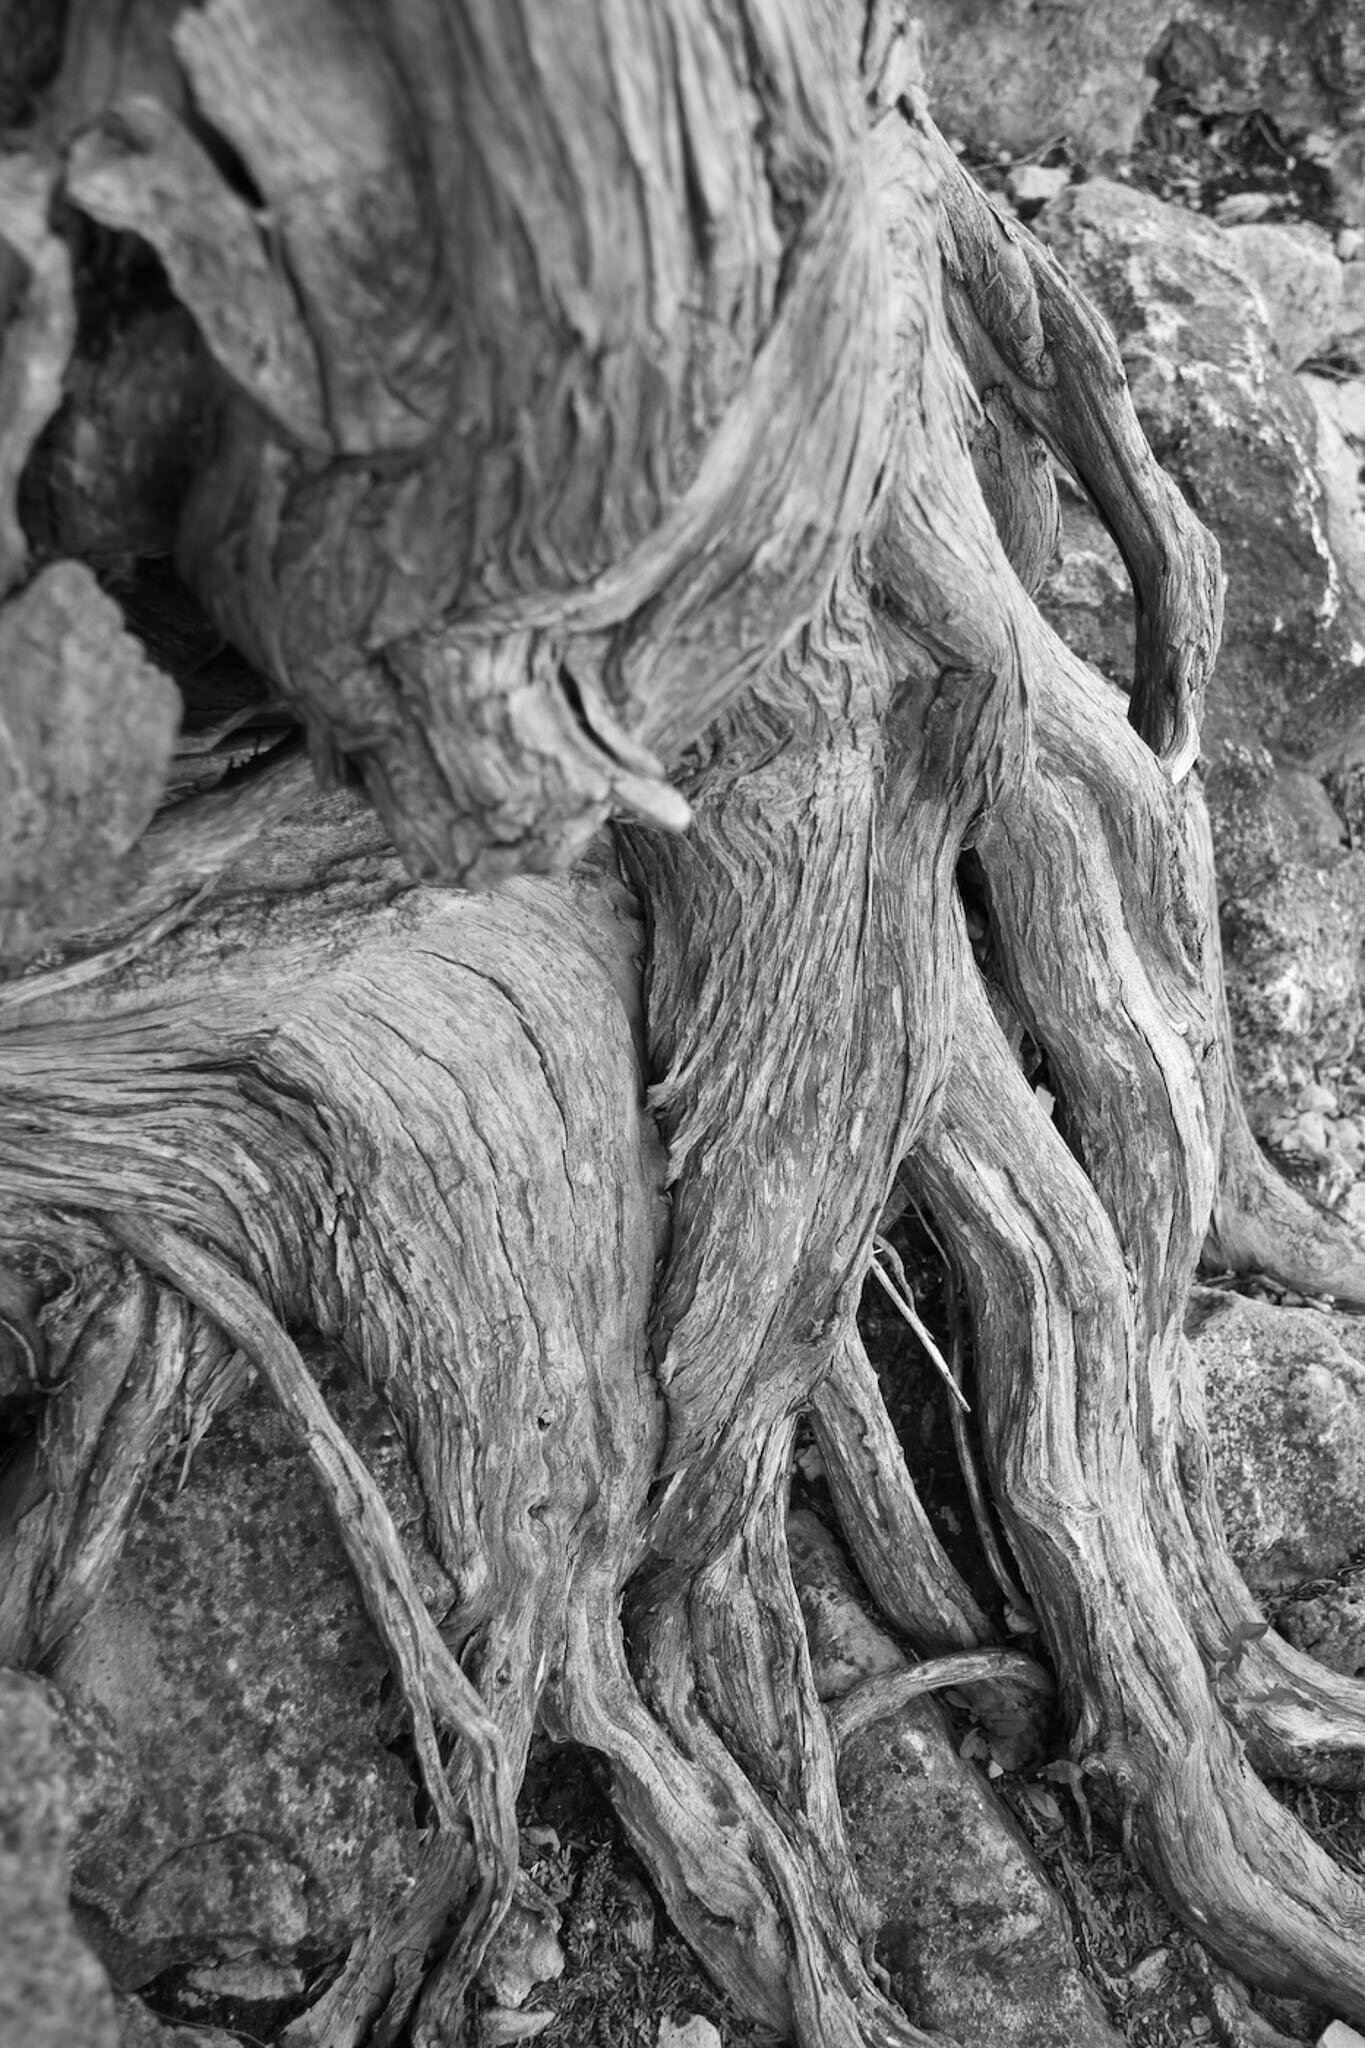  Cedar tree roots over rocks 